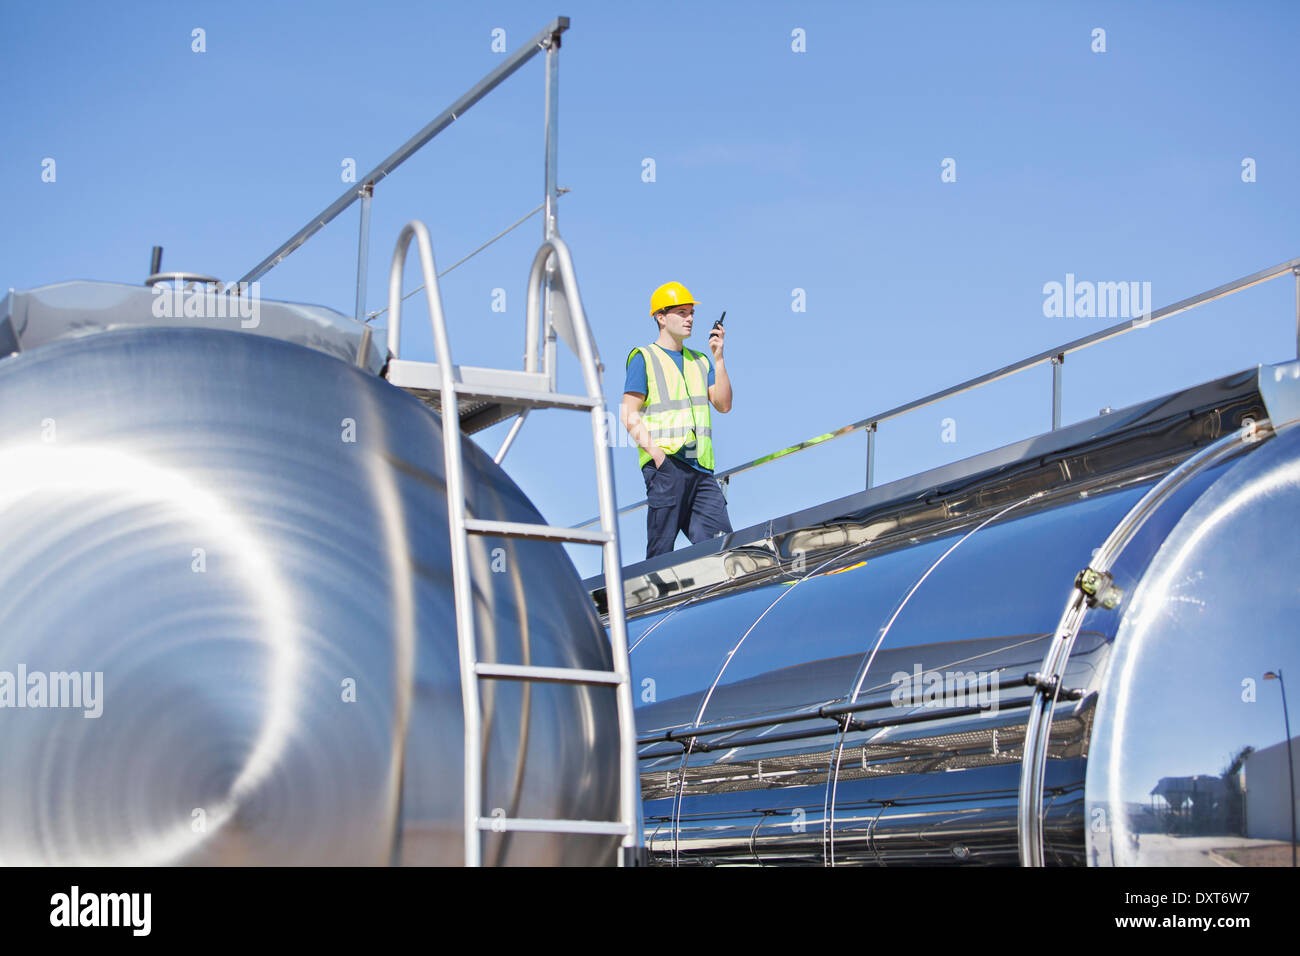 Worker using walkie-talkie on platform above stainless steel milk tanker  Stock Photo - Alamy